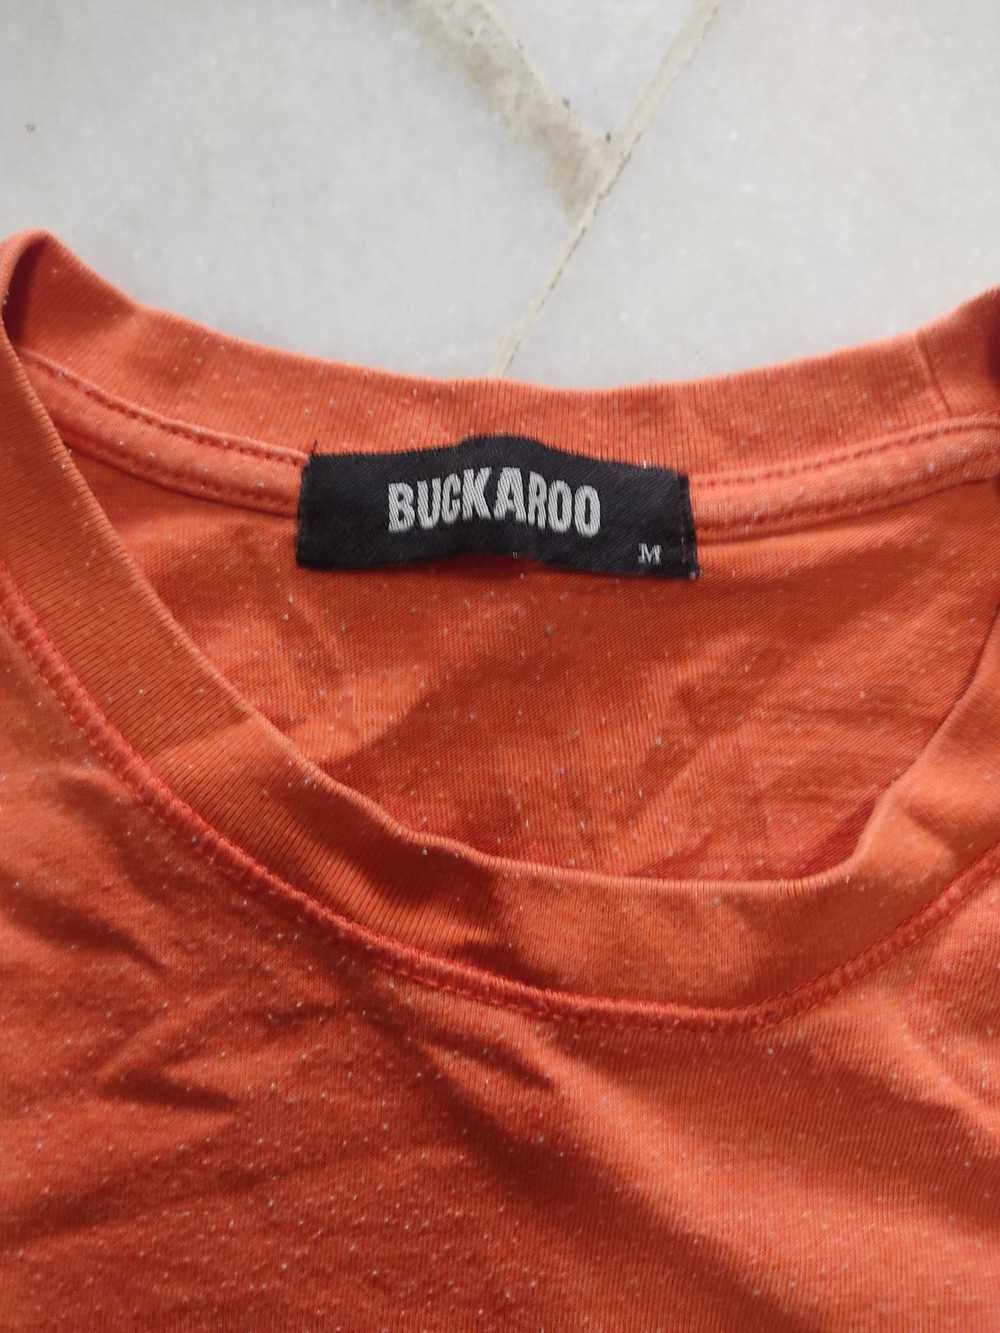 Japanese Brand Buckaroo - image 3